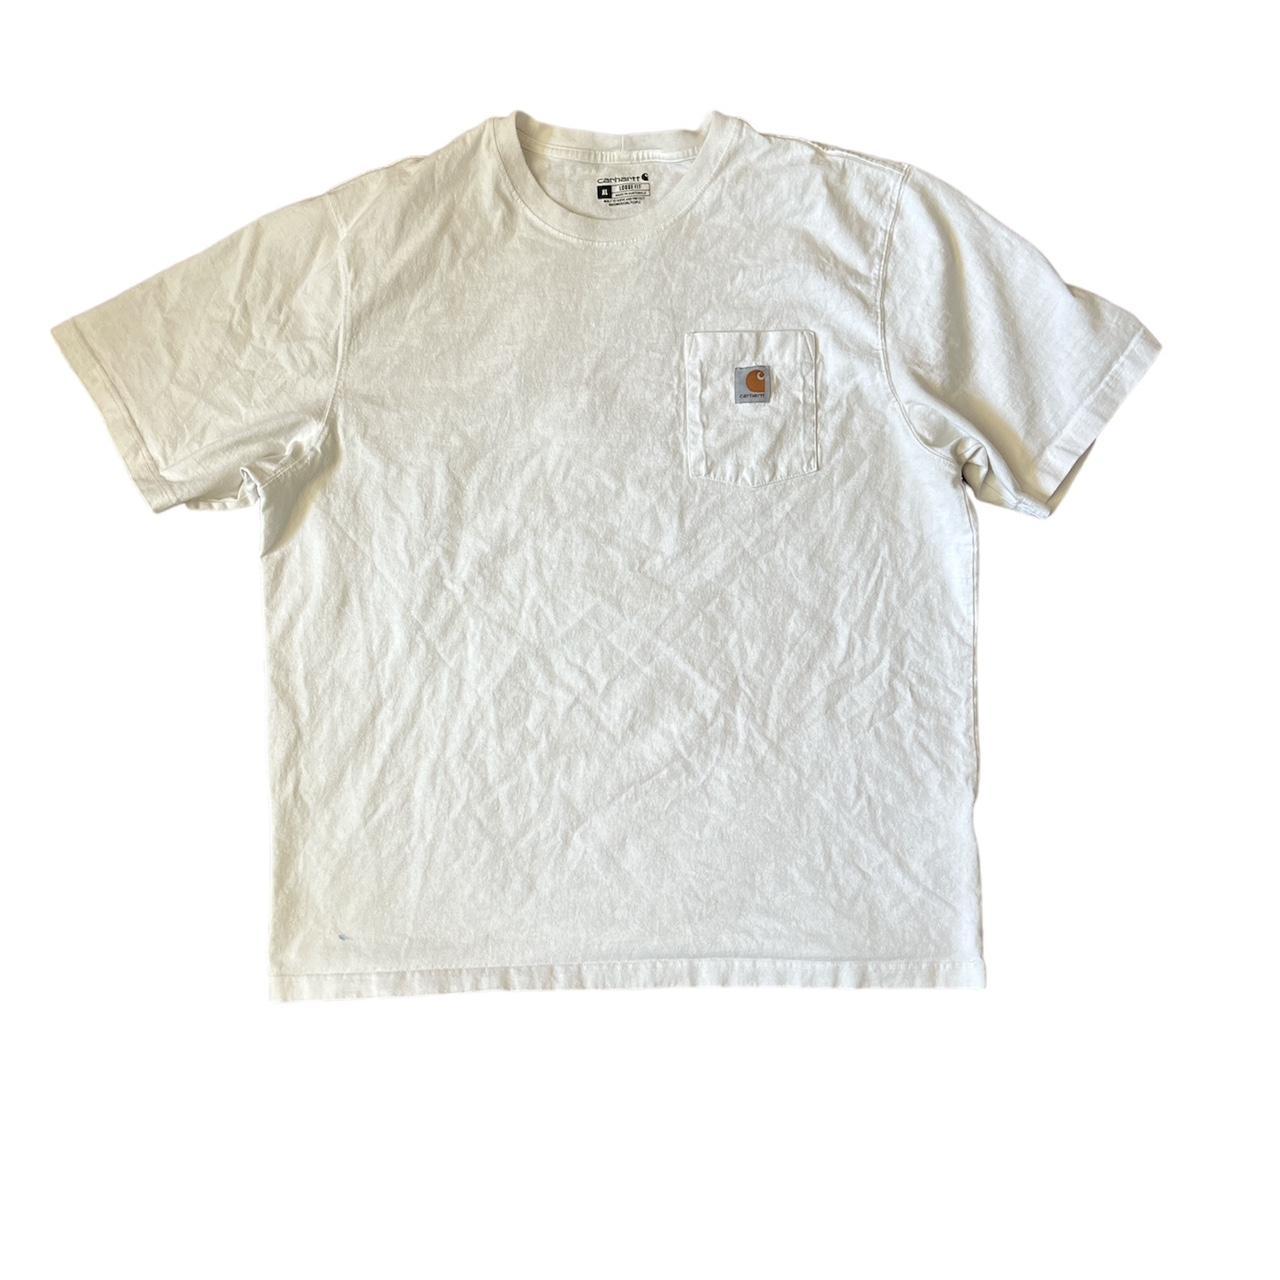 Carhartt Men's Short-Sleeve Workwear Pocket T-Shirt, White, XL